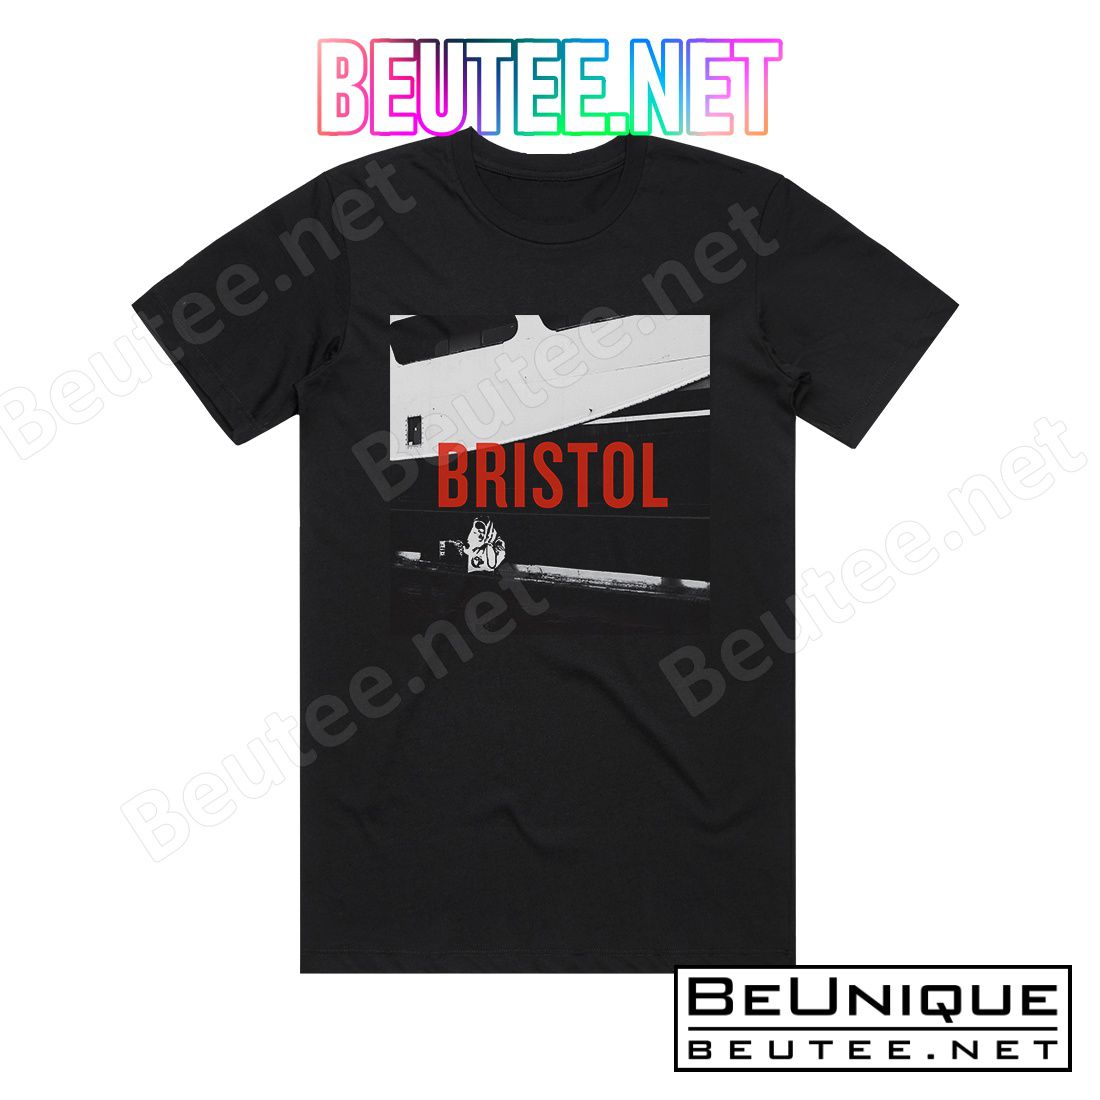 Bristol Bristol Album Cover T-Shirt